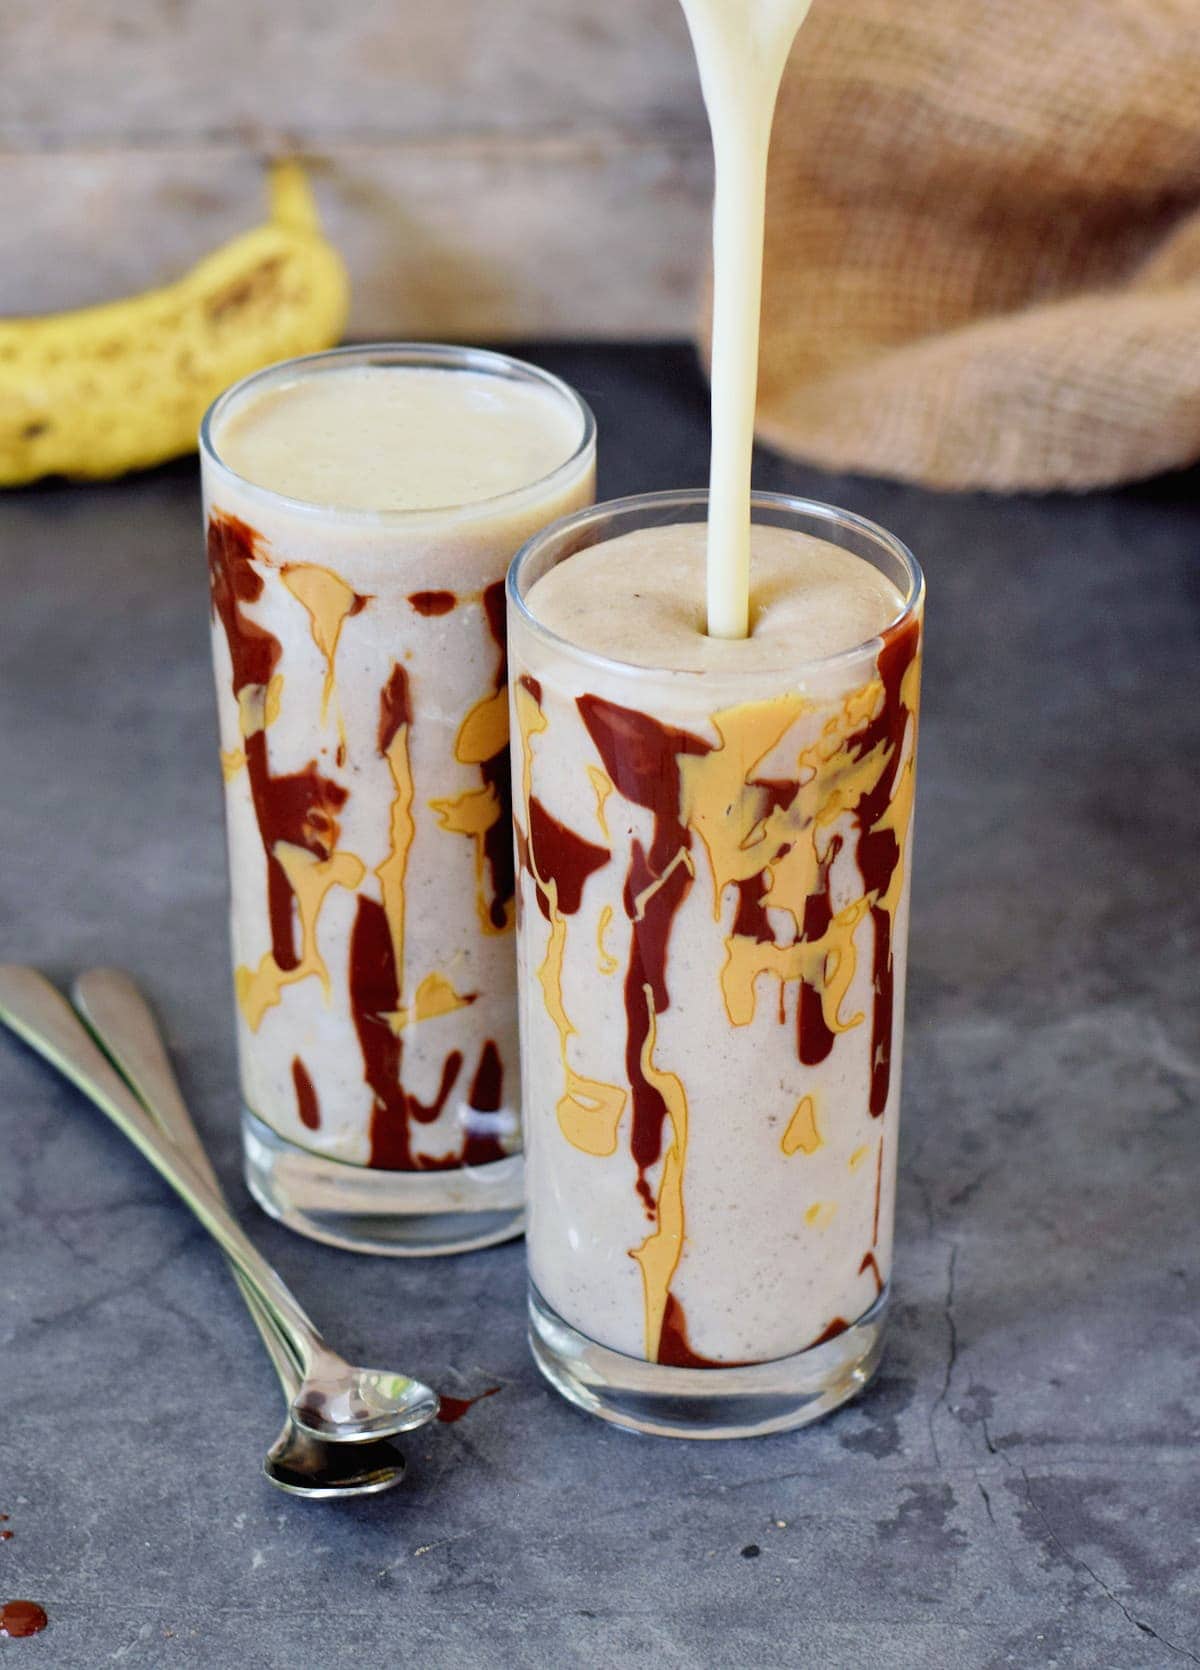 vegan banana milkshake in two glass jars with peanut butter chocolate drizzle